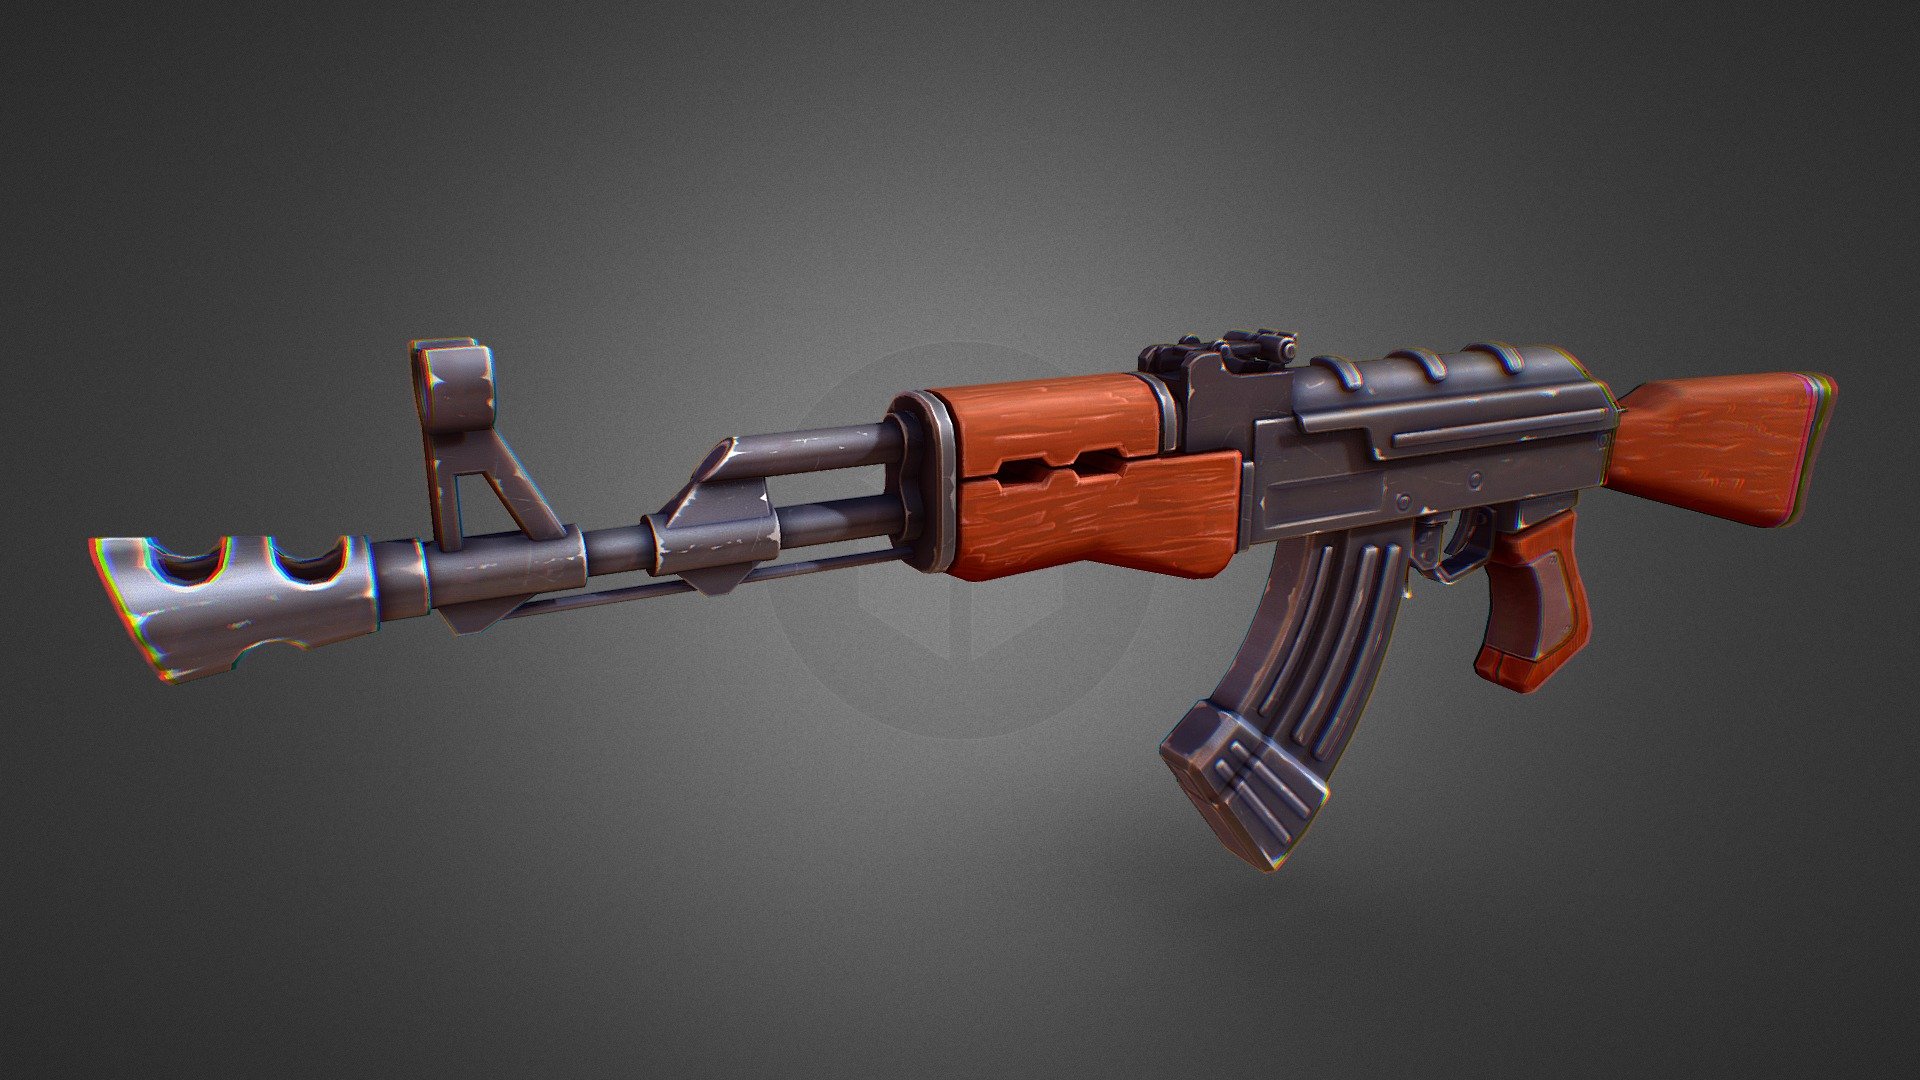 Low-poly stylized AK-47 - Stylized rifle - 3D model by Vladimir Polygalov (@jpegy) 3d model